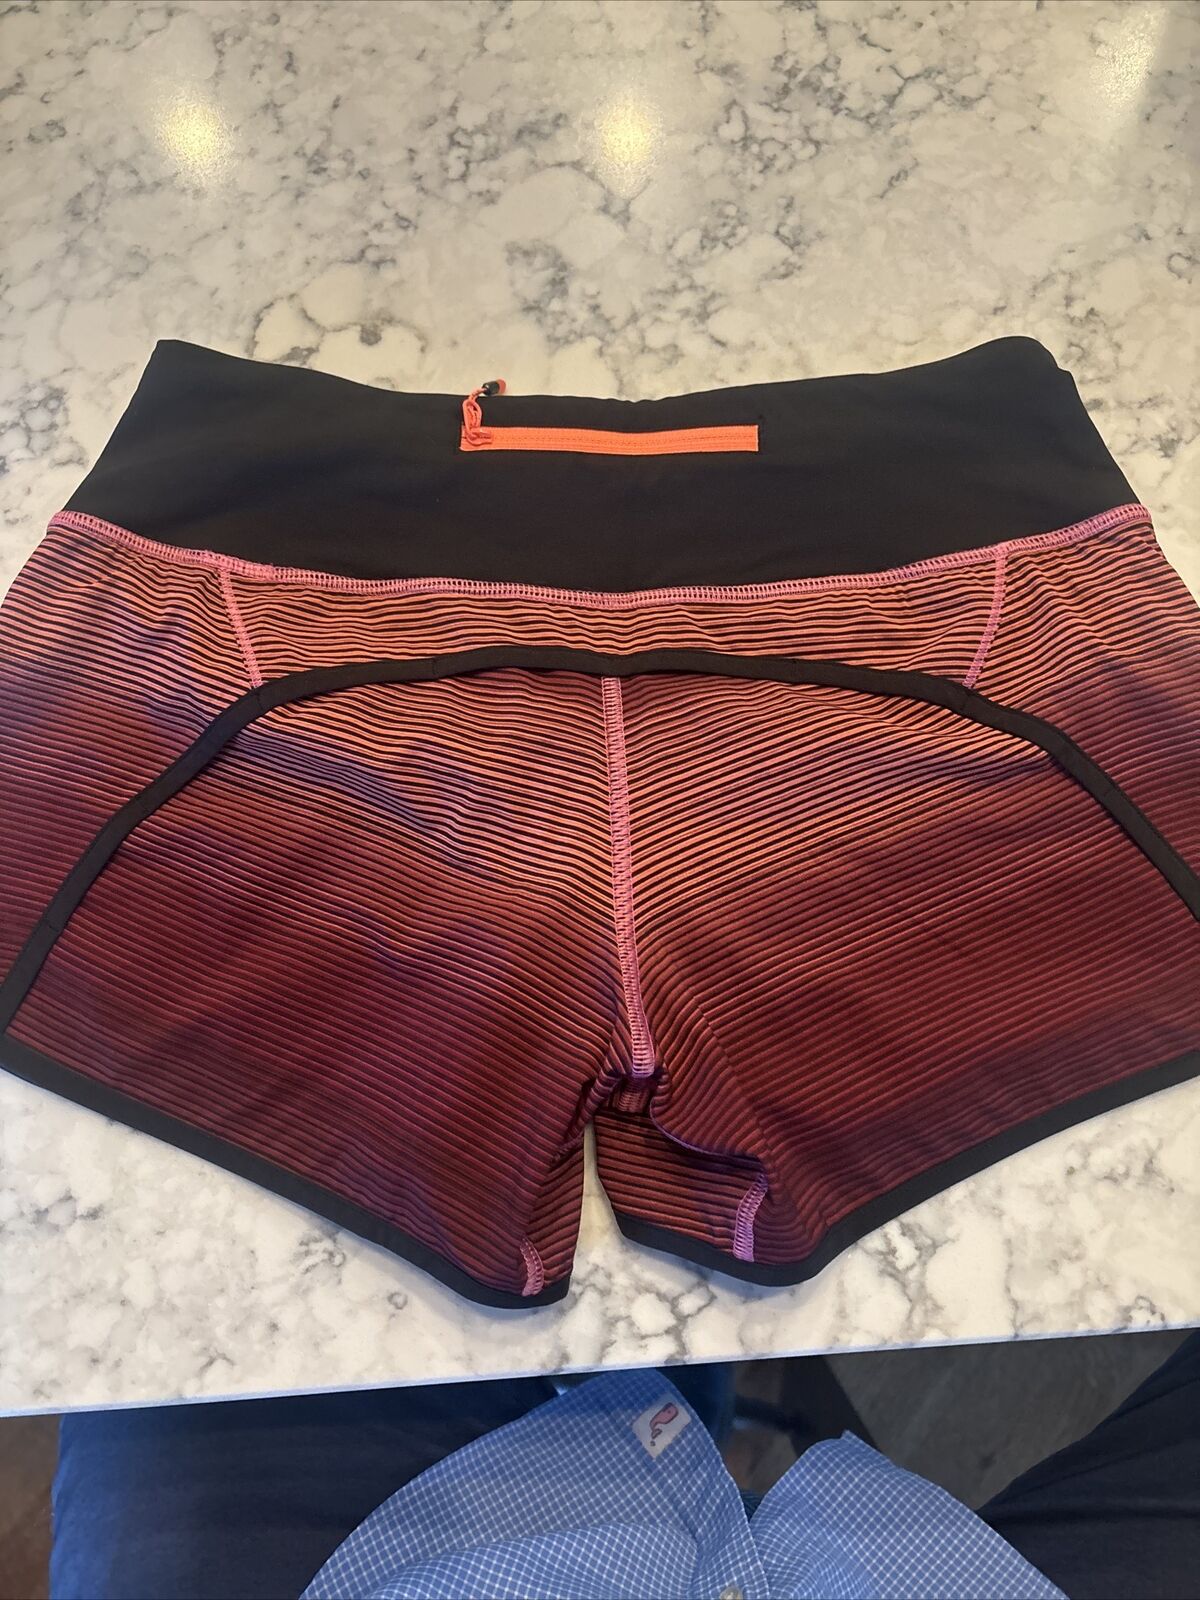 lululemon Black And Red Stripe shorts Women’s 4 - image 3